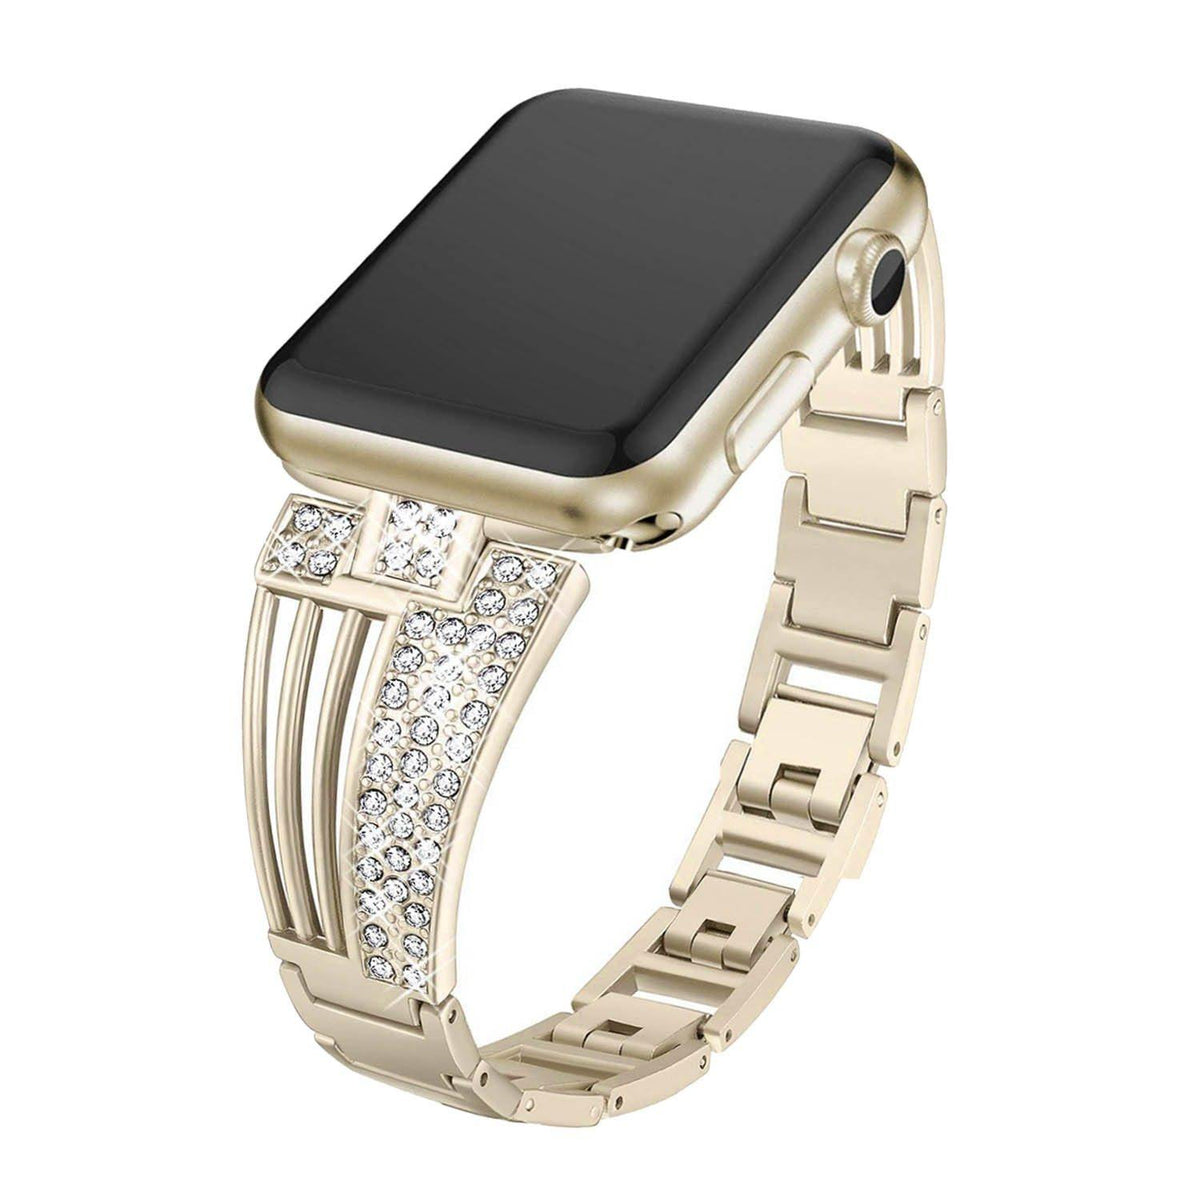 Diamond Apple Watch BandBand Length: 21cmItem Type: WatchbandsCondition: New without tagsClasp Type: buckle[focus_keyword]Apple Watch BandArleathercraft